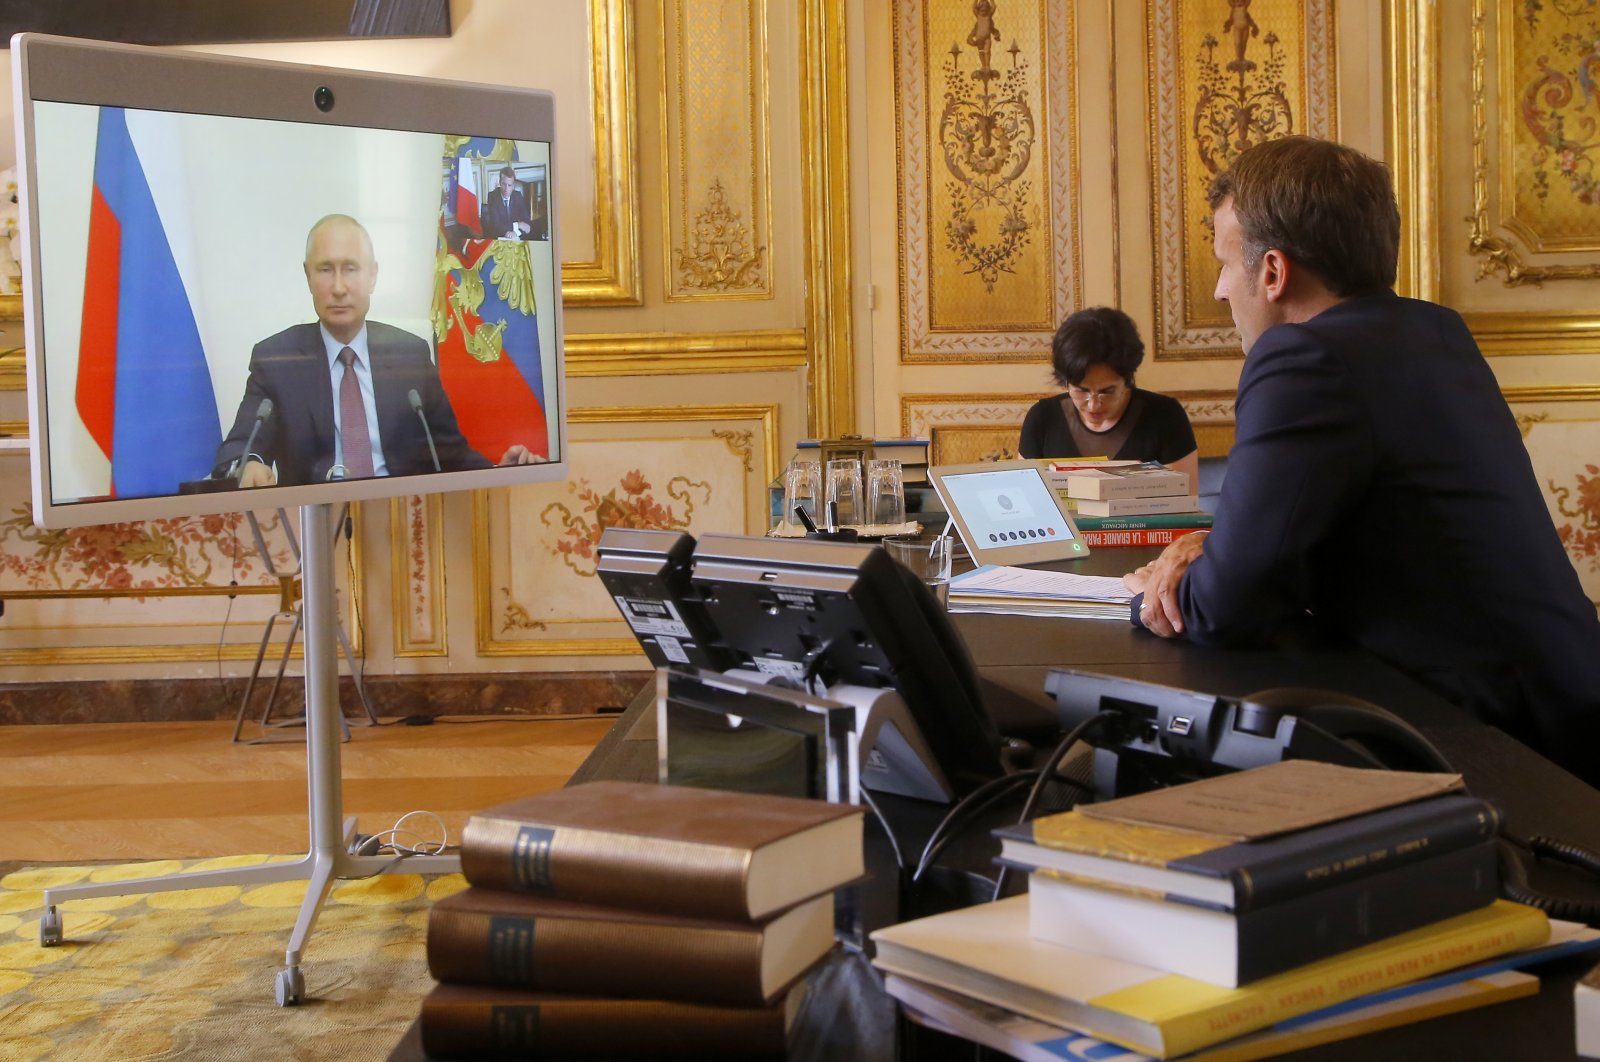 Prancis siap melindungi Ukraina dari agresi Rusia: Macron